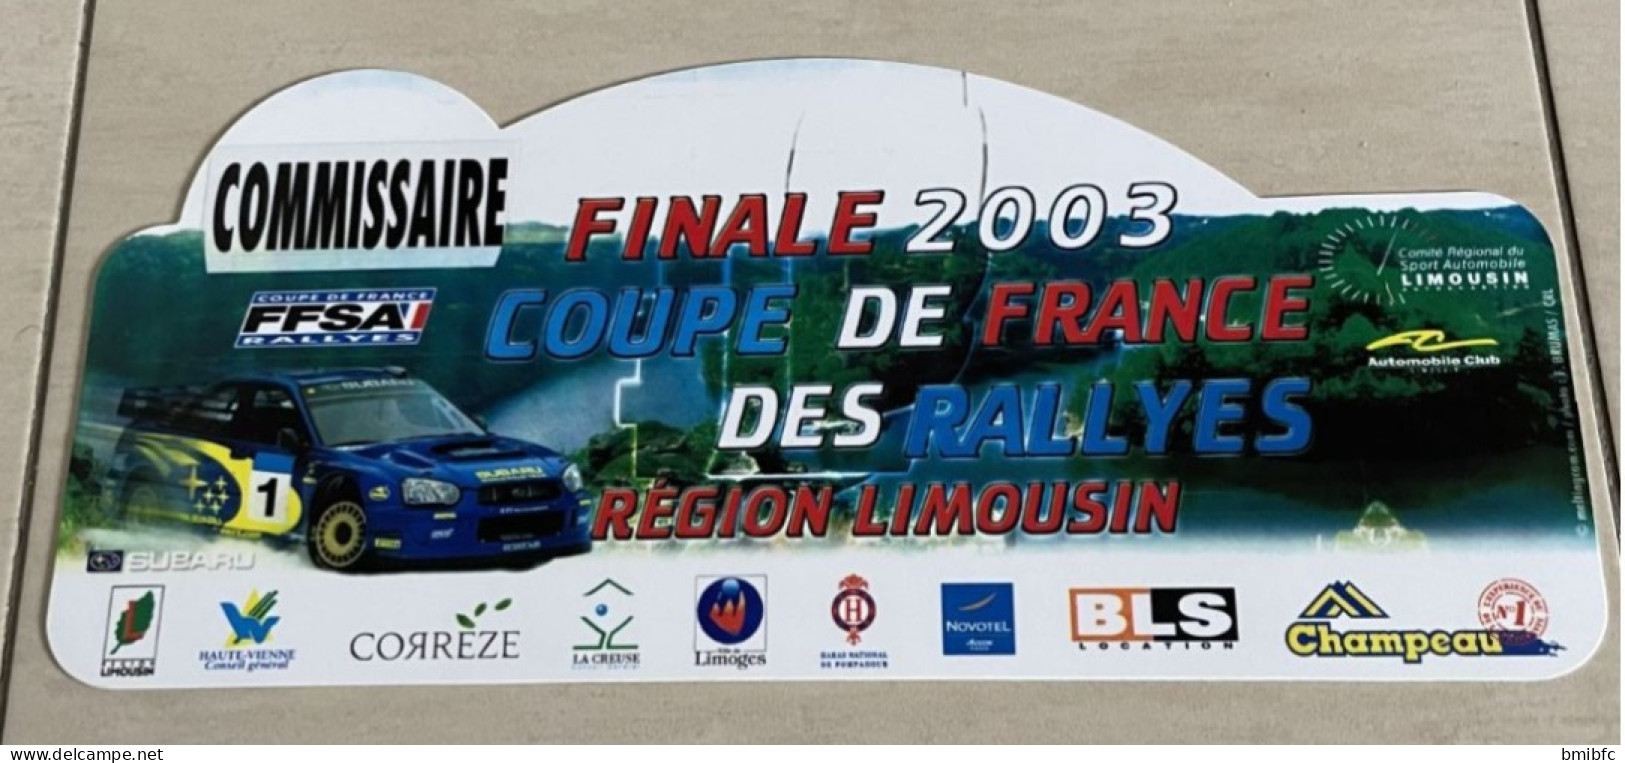 FINALE 2003 COUPE DE FRANCE DES RALLYES RÉGION LIMOUSIN - Rallye (Rally) Plates